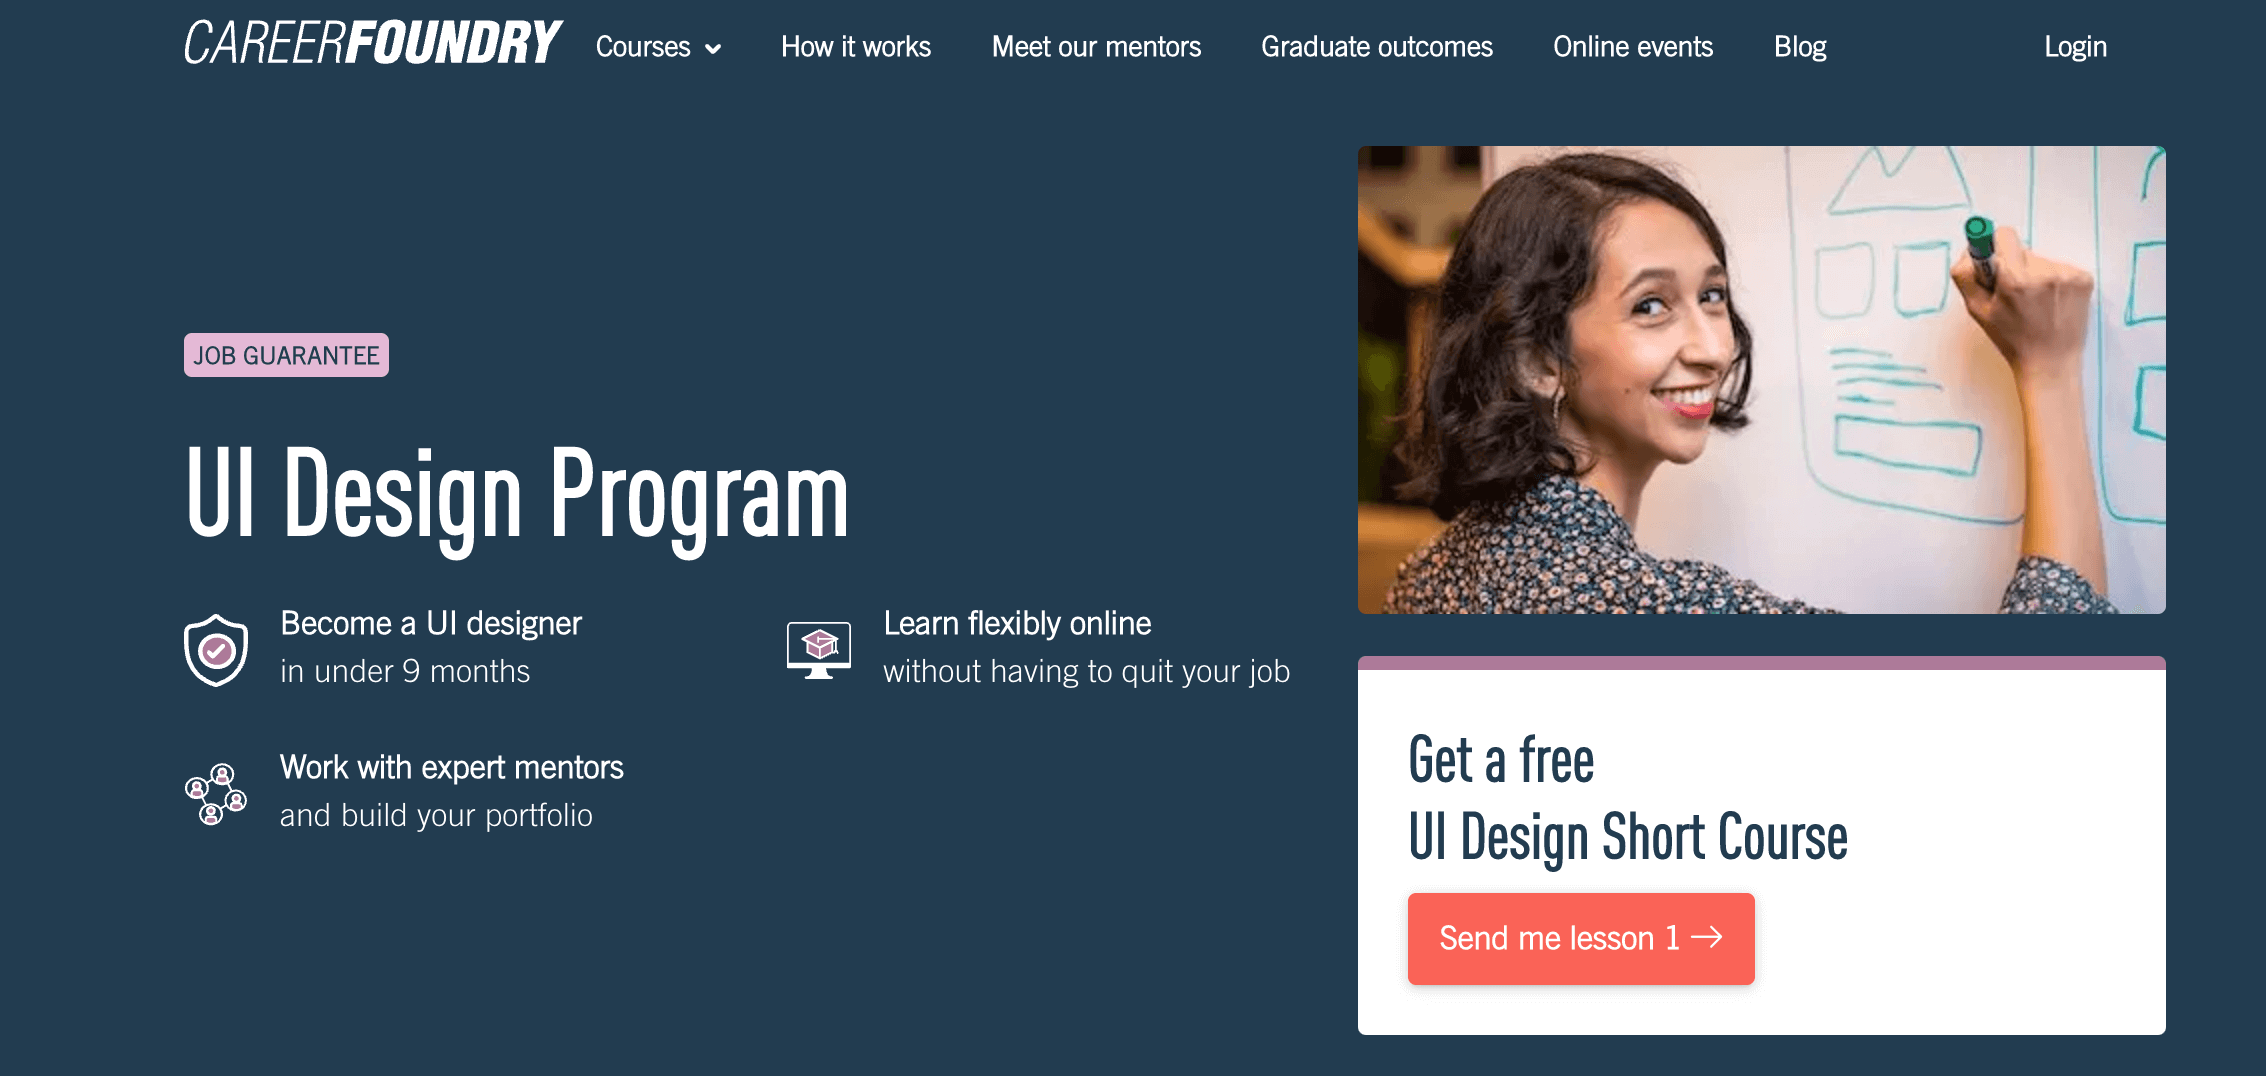 CareerFoundry UI Design Program